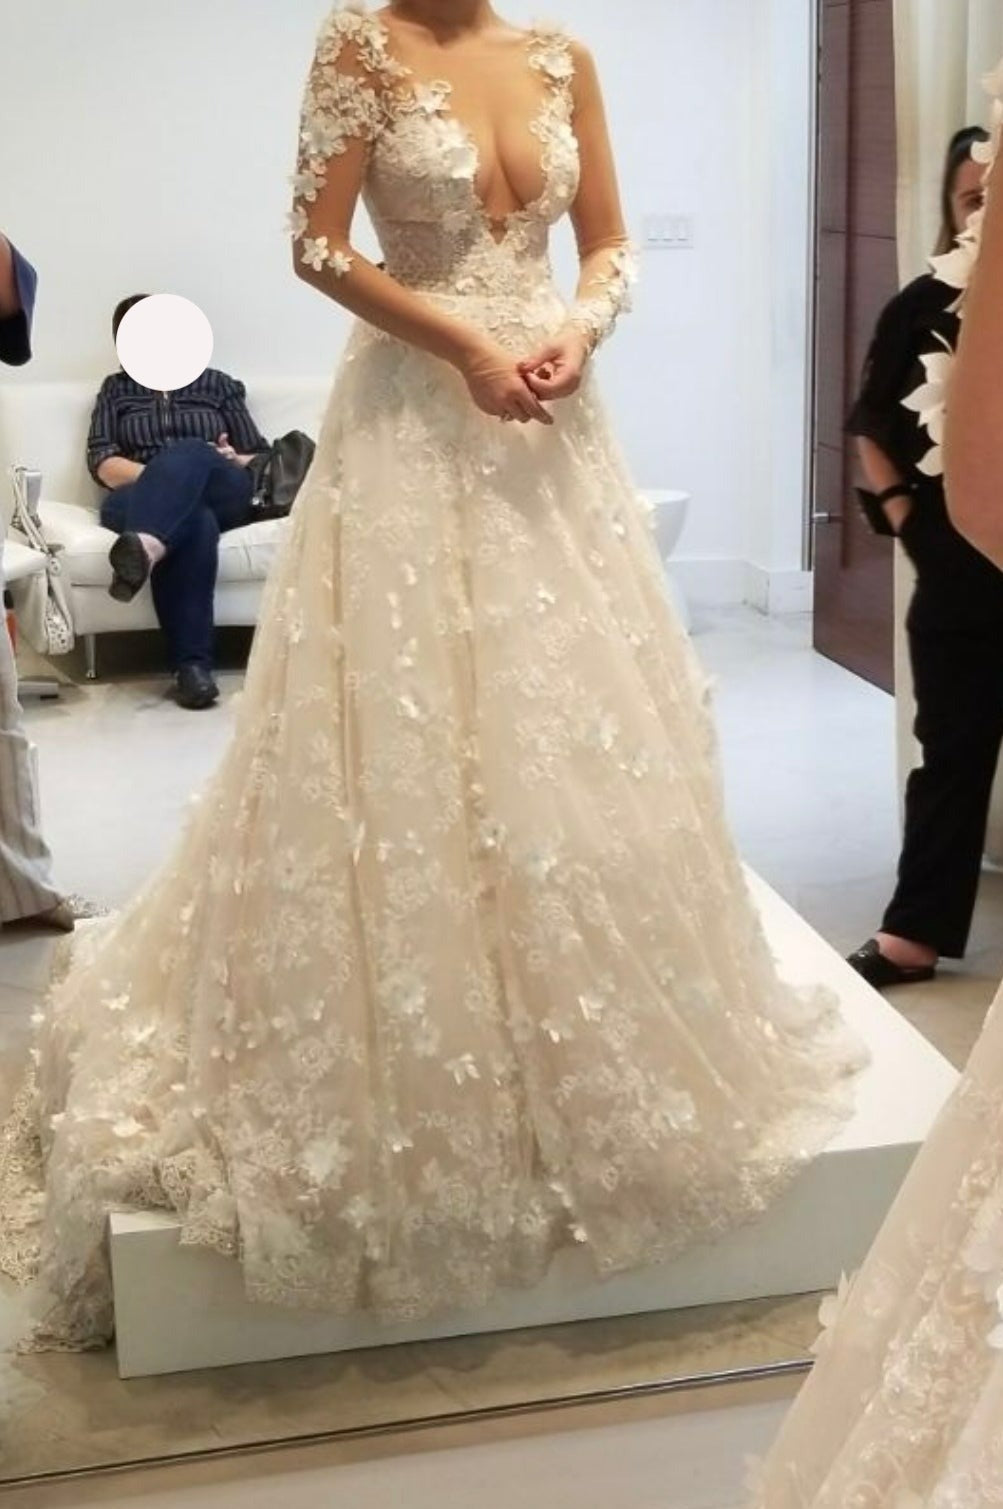 Galia lahav 'Arabella' wedding dress size-04 NEW